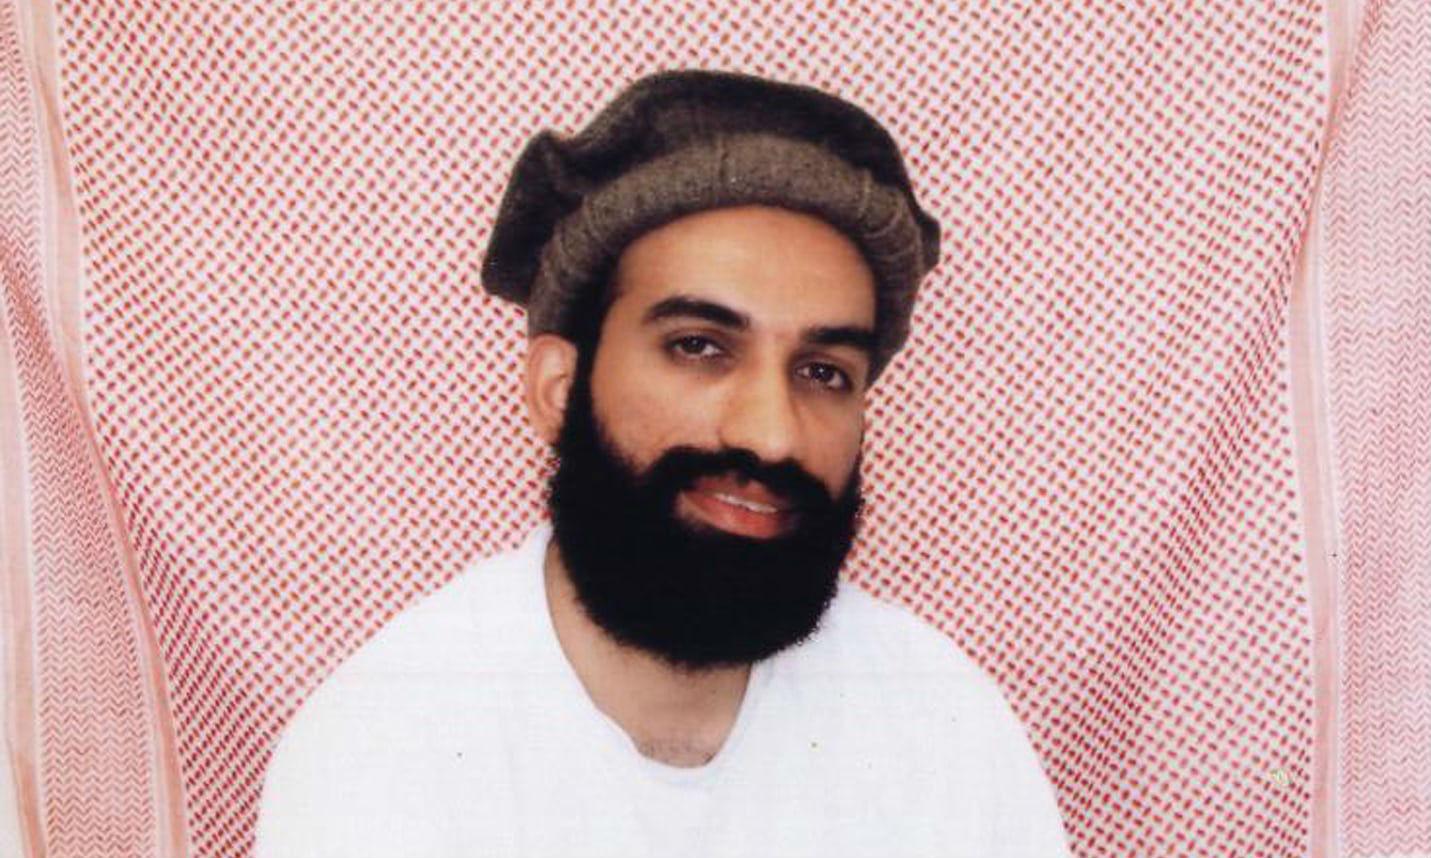 Ammar al-Baluchi was used as a training prop to teach interrogators torture techniques